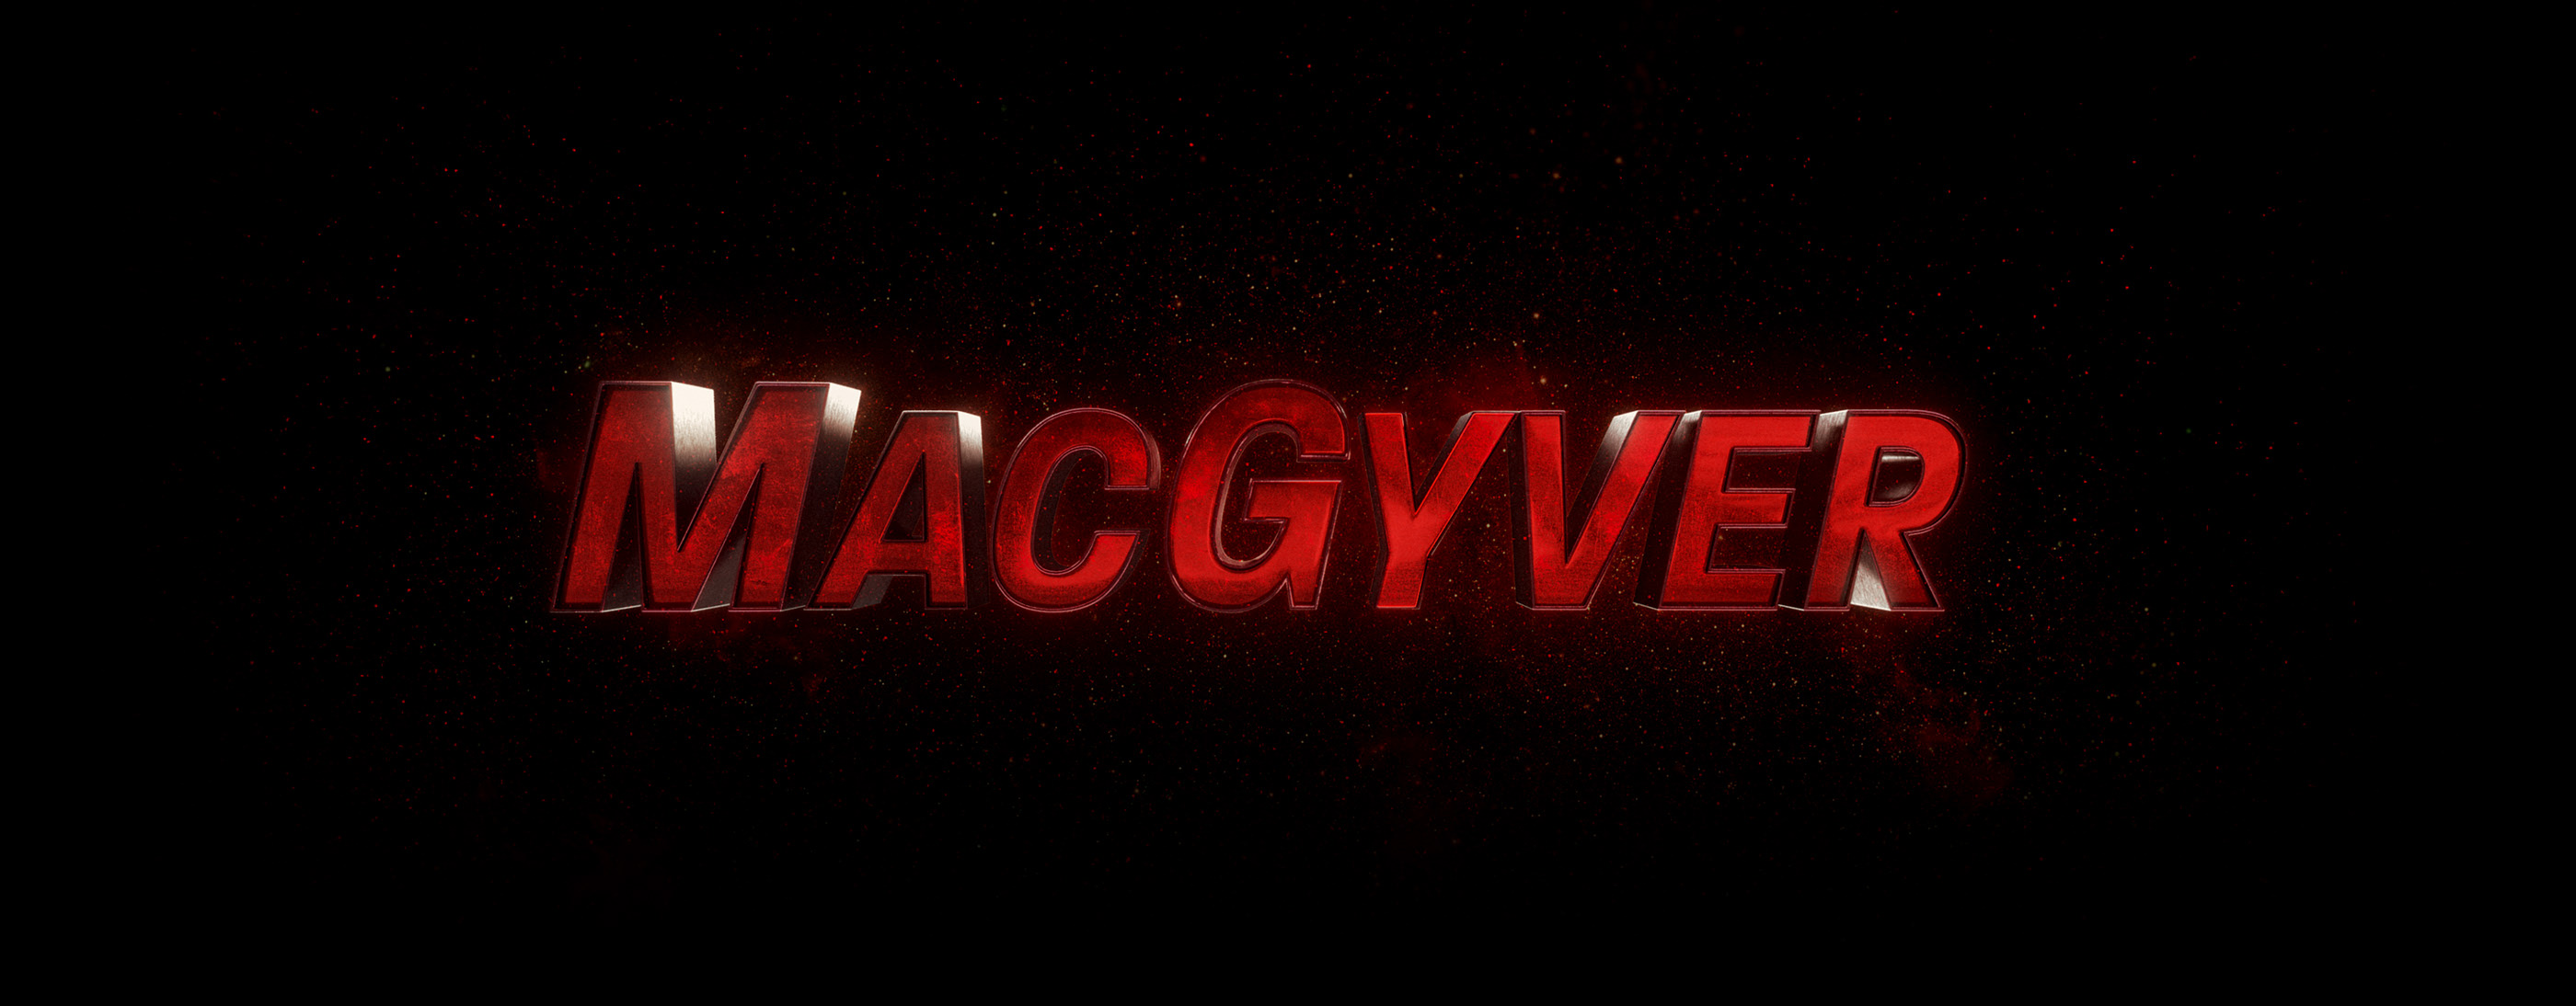 MacGyver \/ Season 4 \/ Intro on Behanceed15aa92671587.5e51115fed38d.jpg